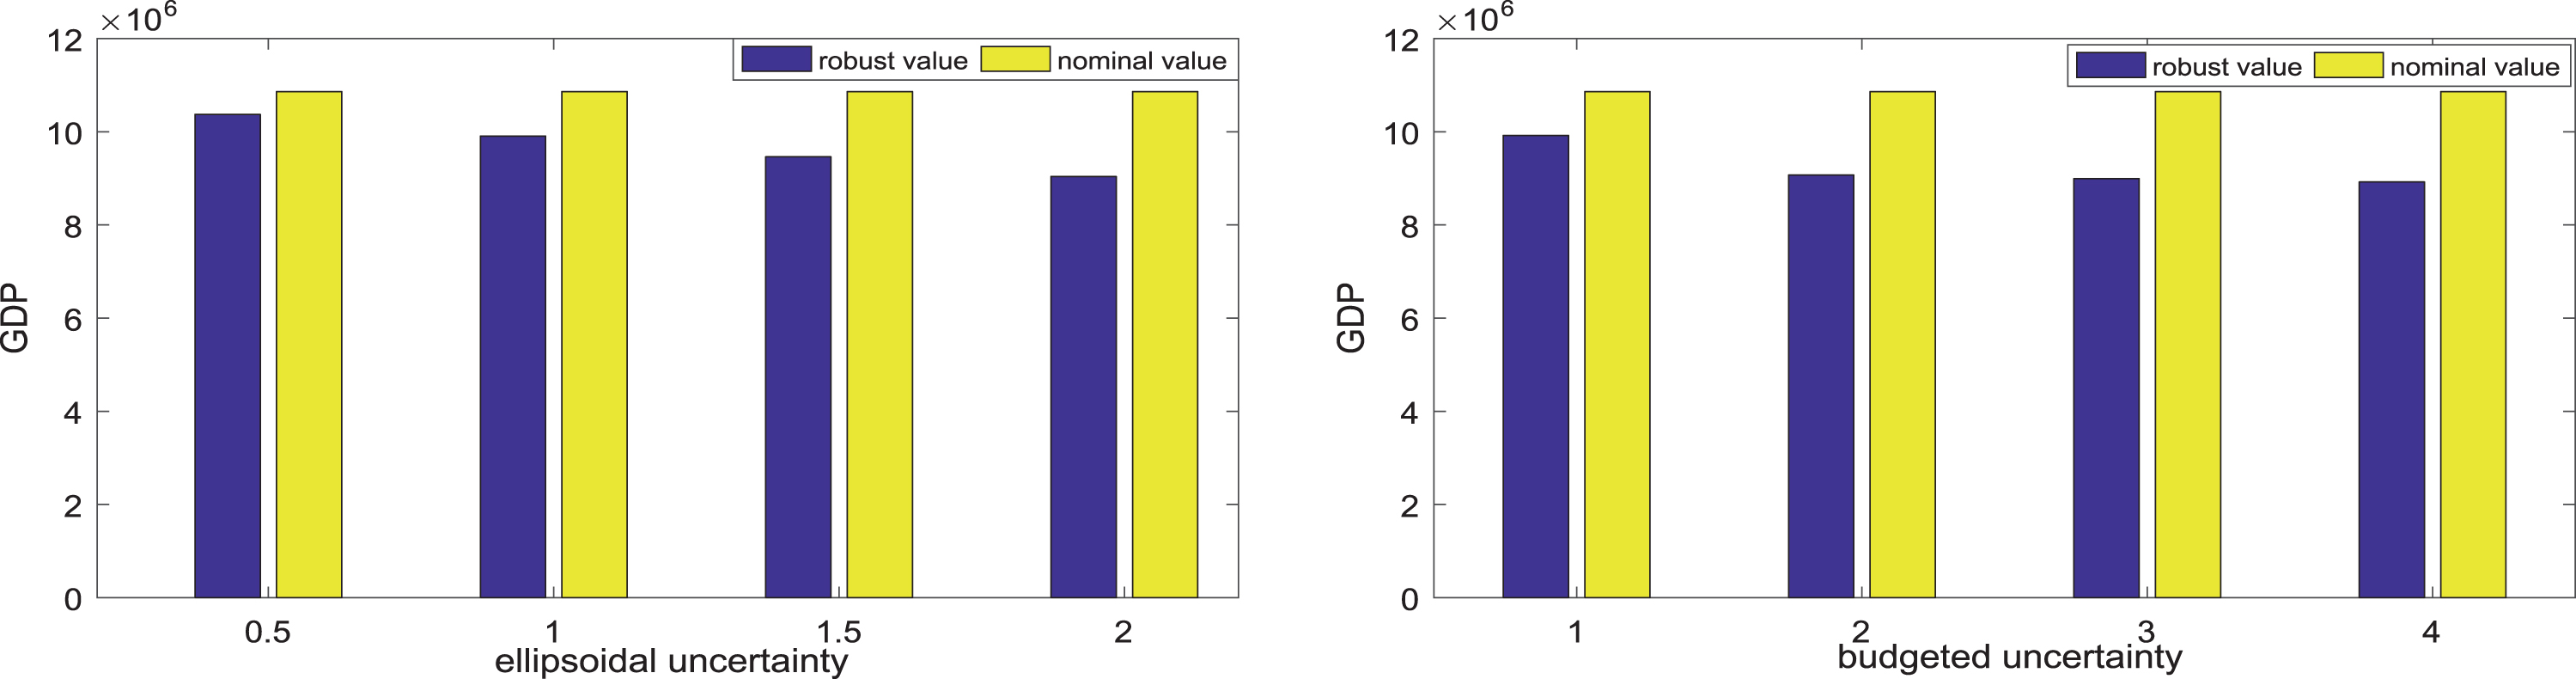 Comparison results under different uncertainty set, σl = 0.5.